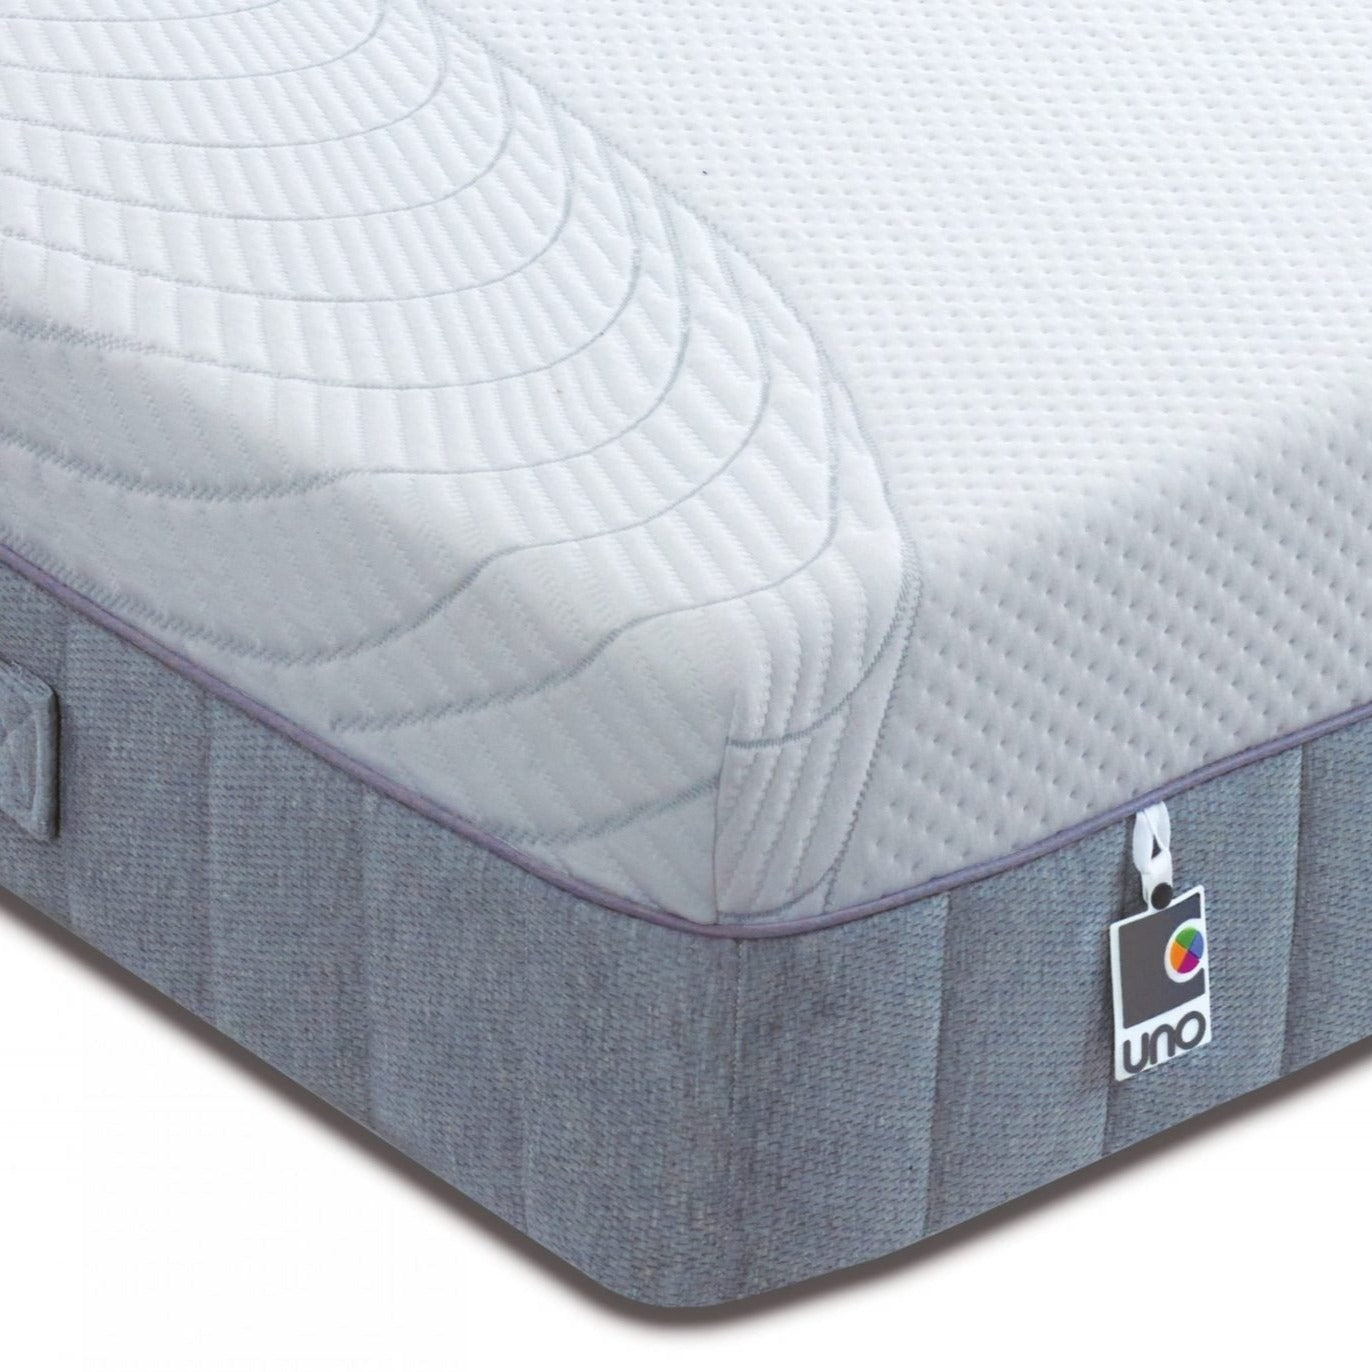 Uno Comfort Pocket 1000 mattress 135 x 190cm – Double by Breasley